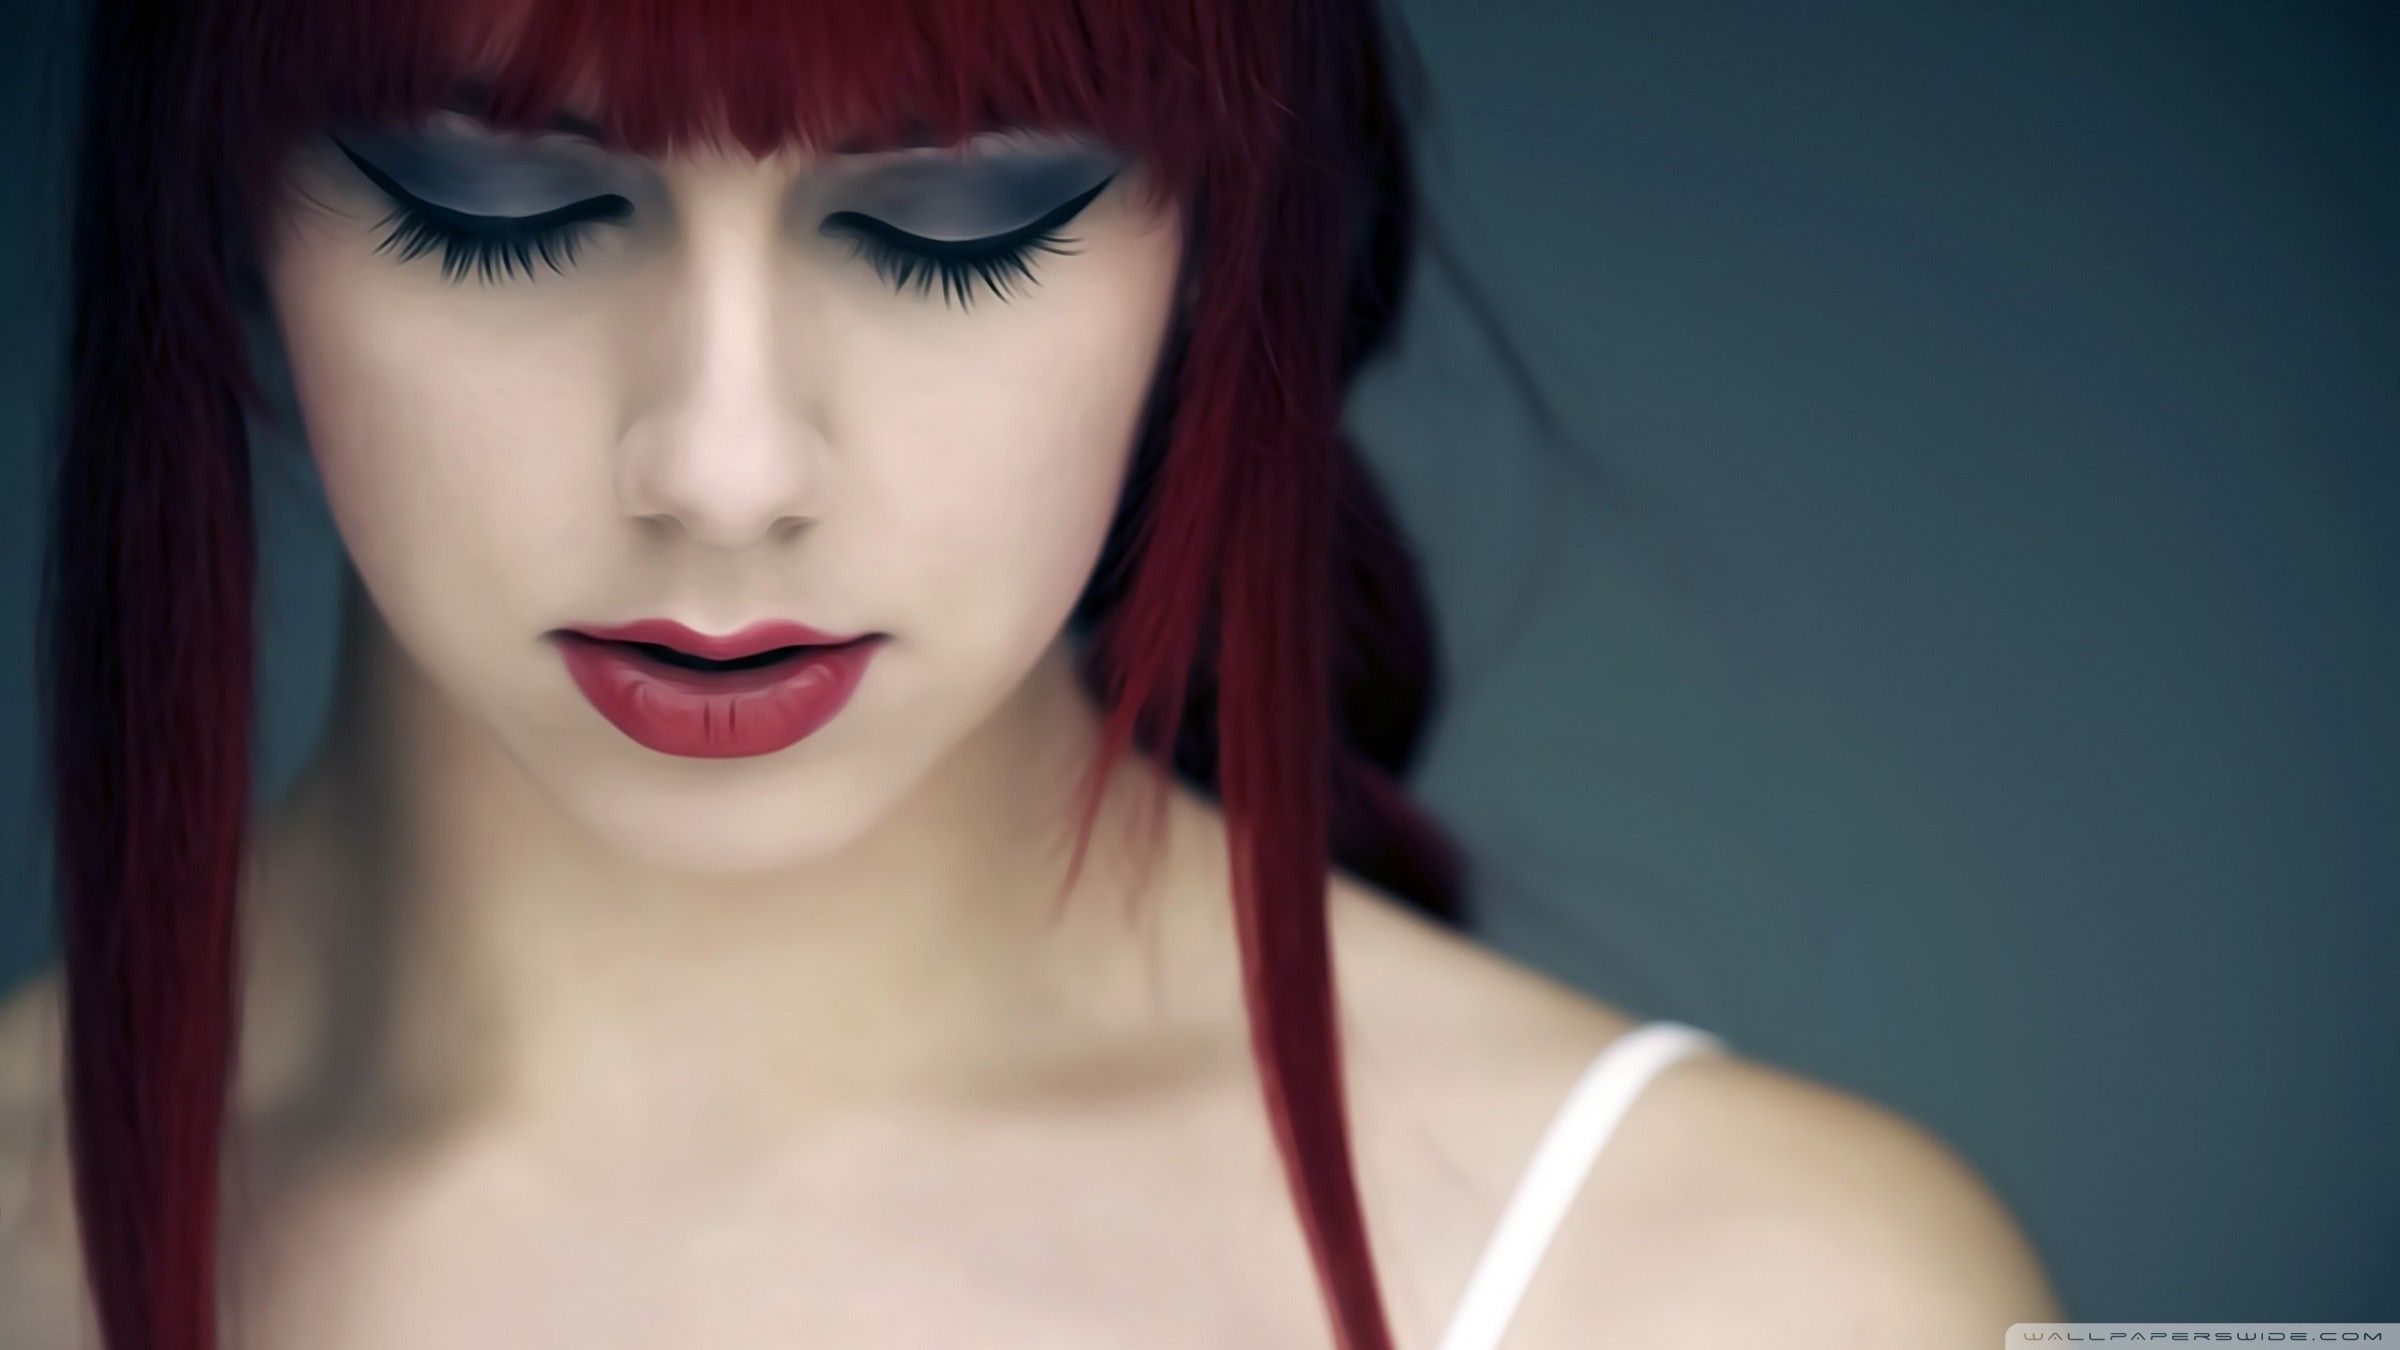 #makeup, #closed eyes, #redhead, wallpaper. People